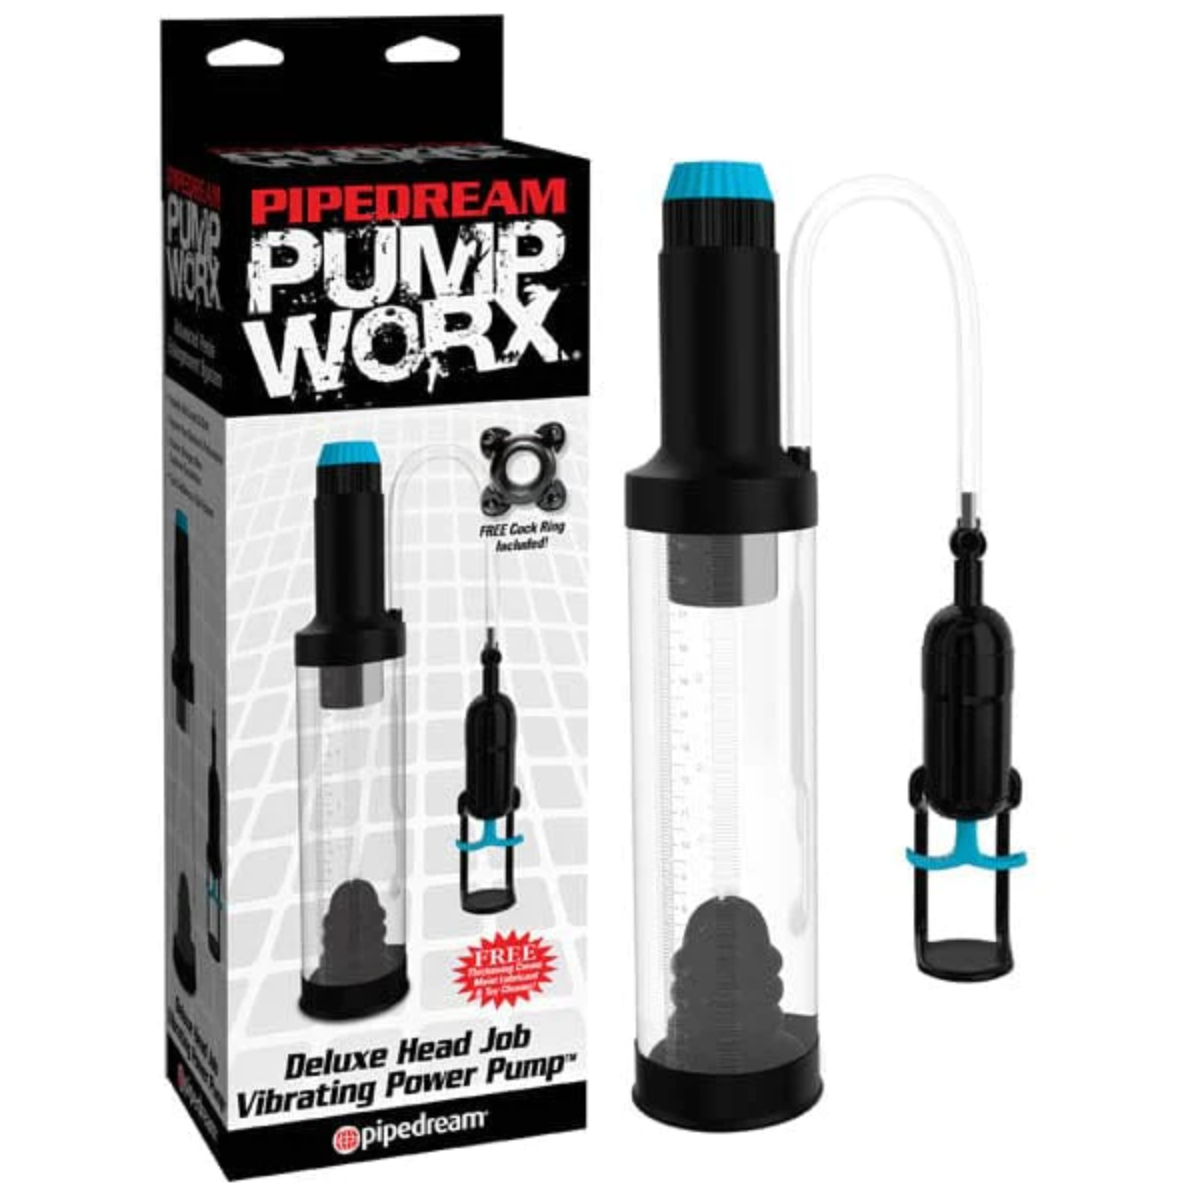 Bomba Pump Worx Deluxe Head Job Vibrating Power Pump – Clear/Black Cake Sex Shop Juguetes Sexuales para Adultos